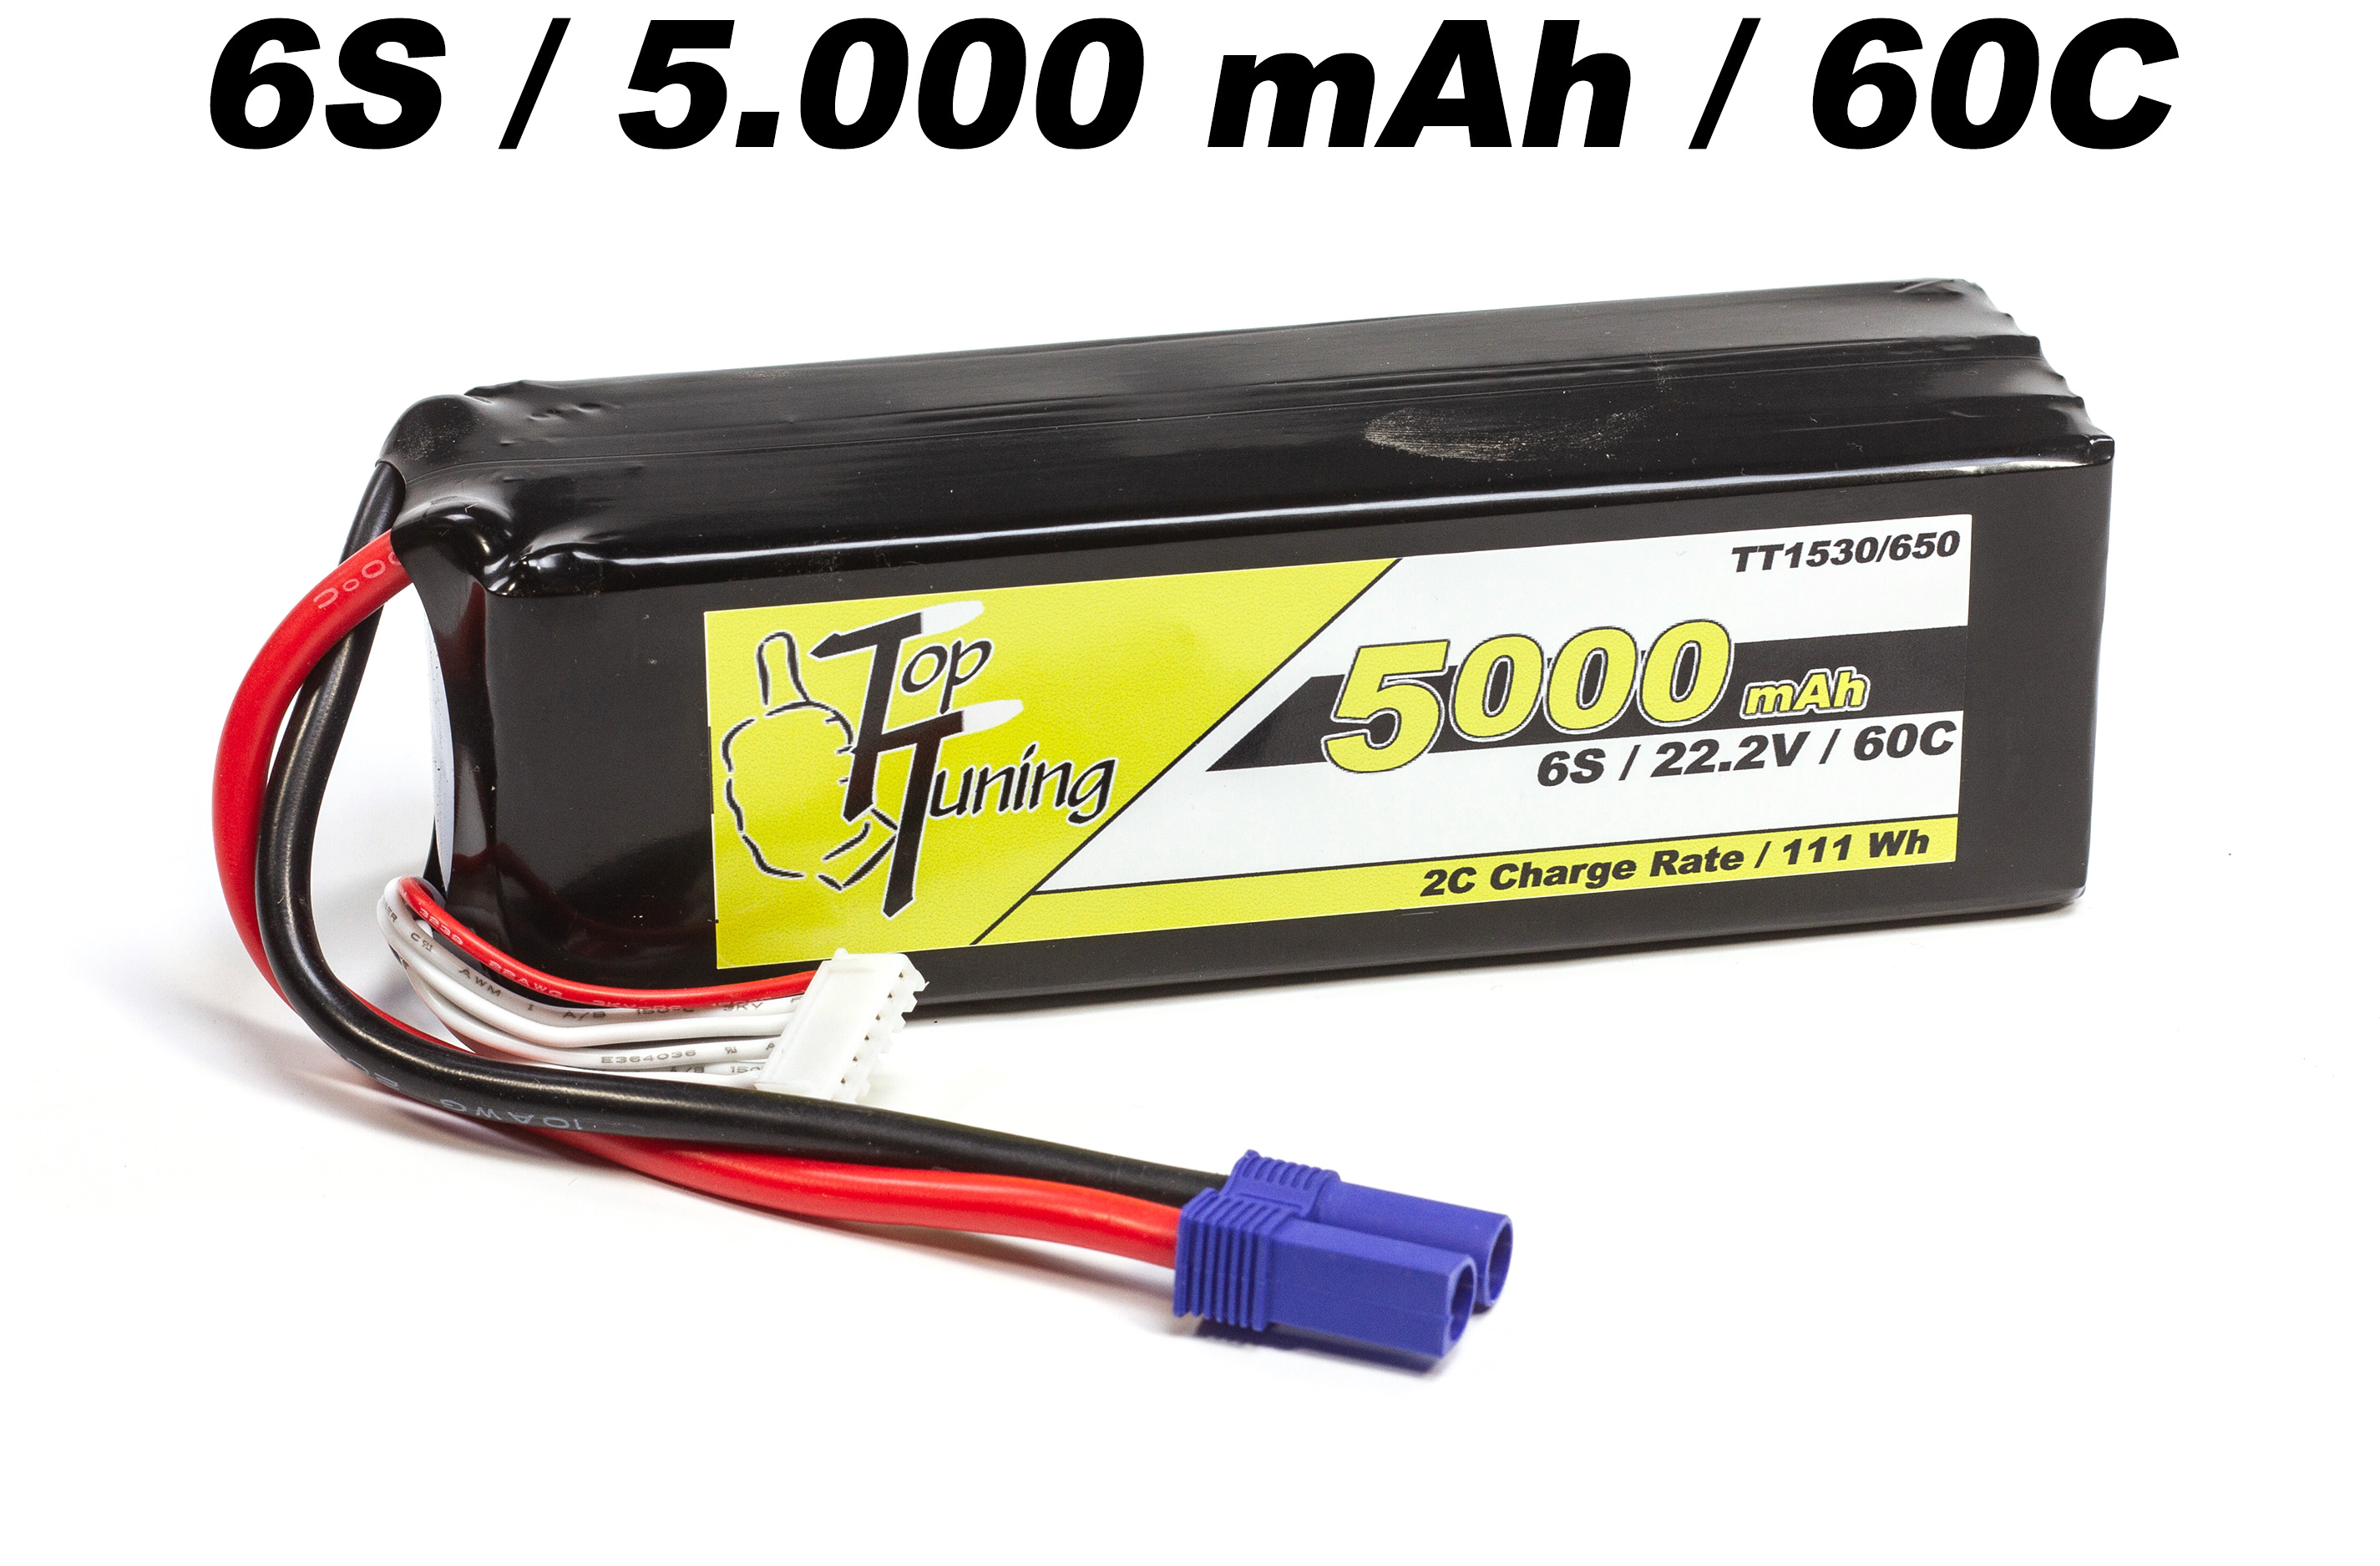 TT1530/650 Top Tuning 5000 mAh LiPo battery 6S, 22.2V 60C